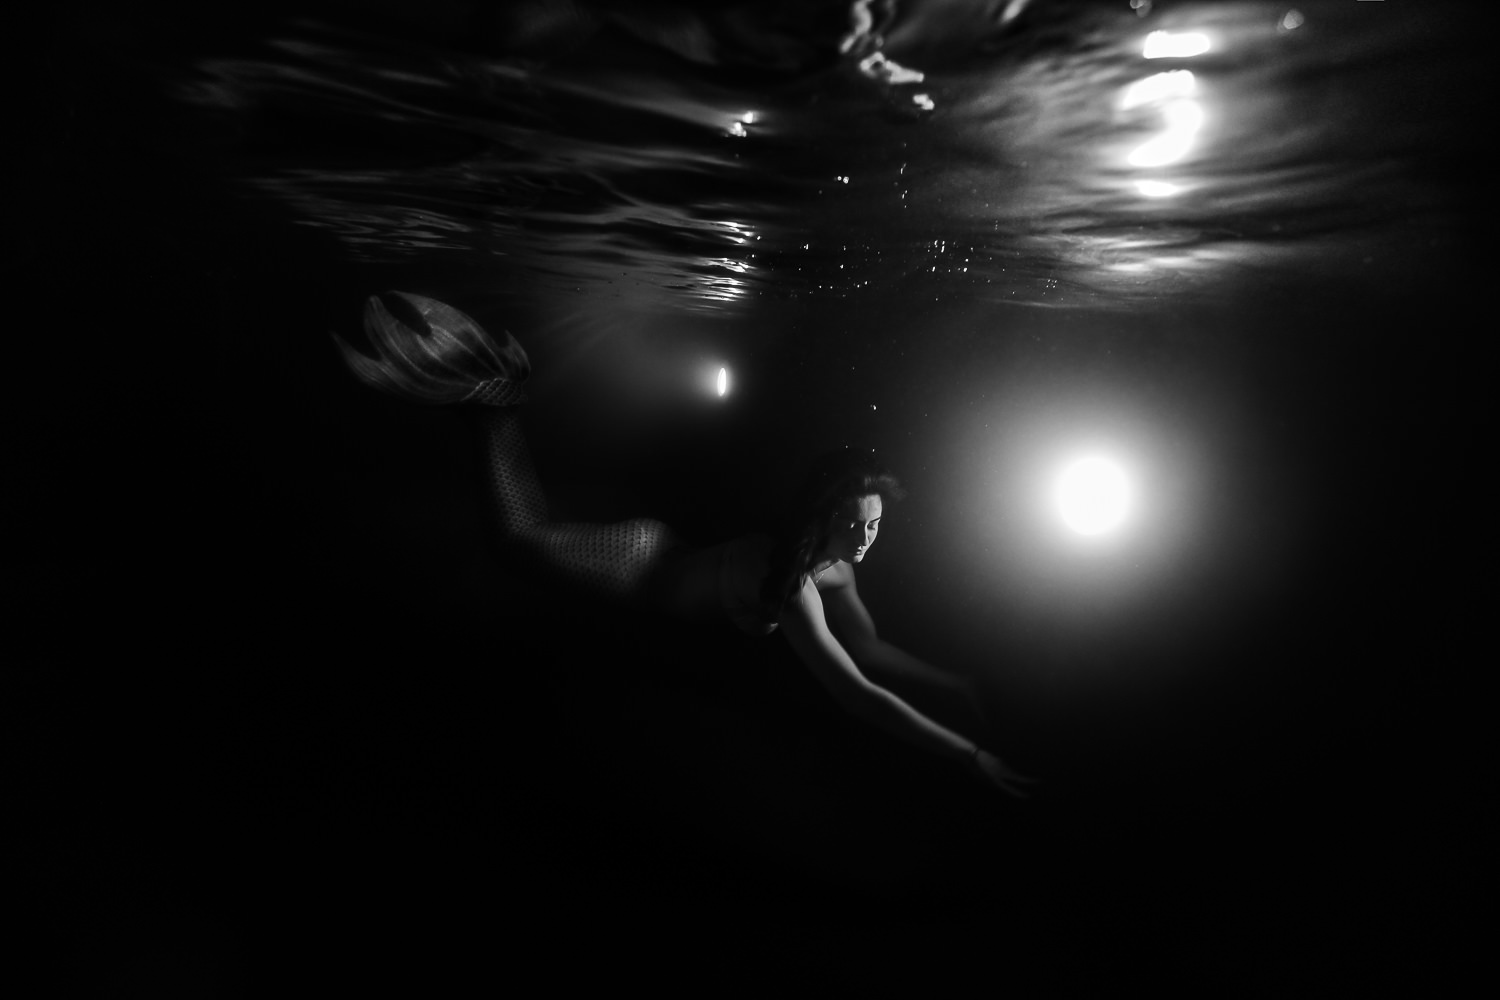 Photographe underwater sirène en piscine 